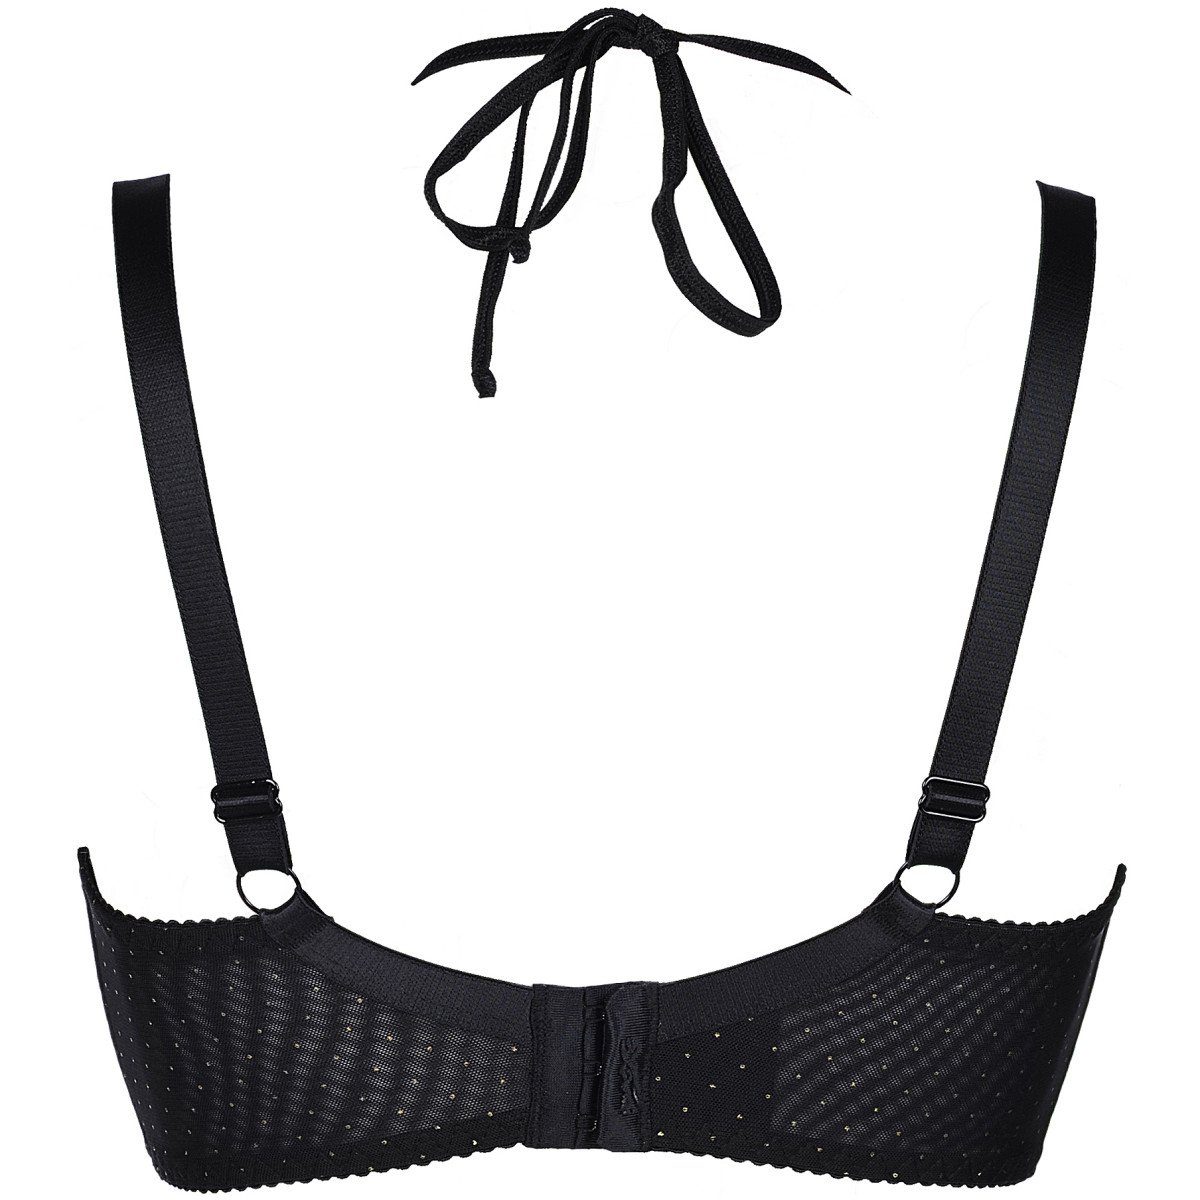 Axami Size Plus V-8661PS Size bra - Bustier Plus black (80E,80F,85D,85E,85F,90B)